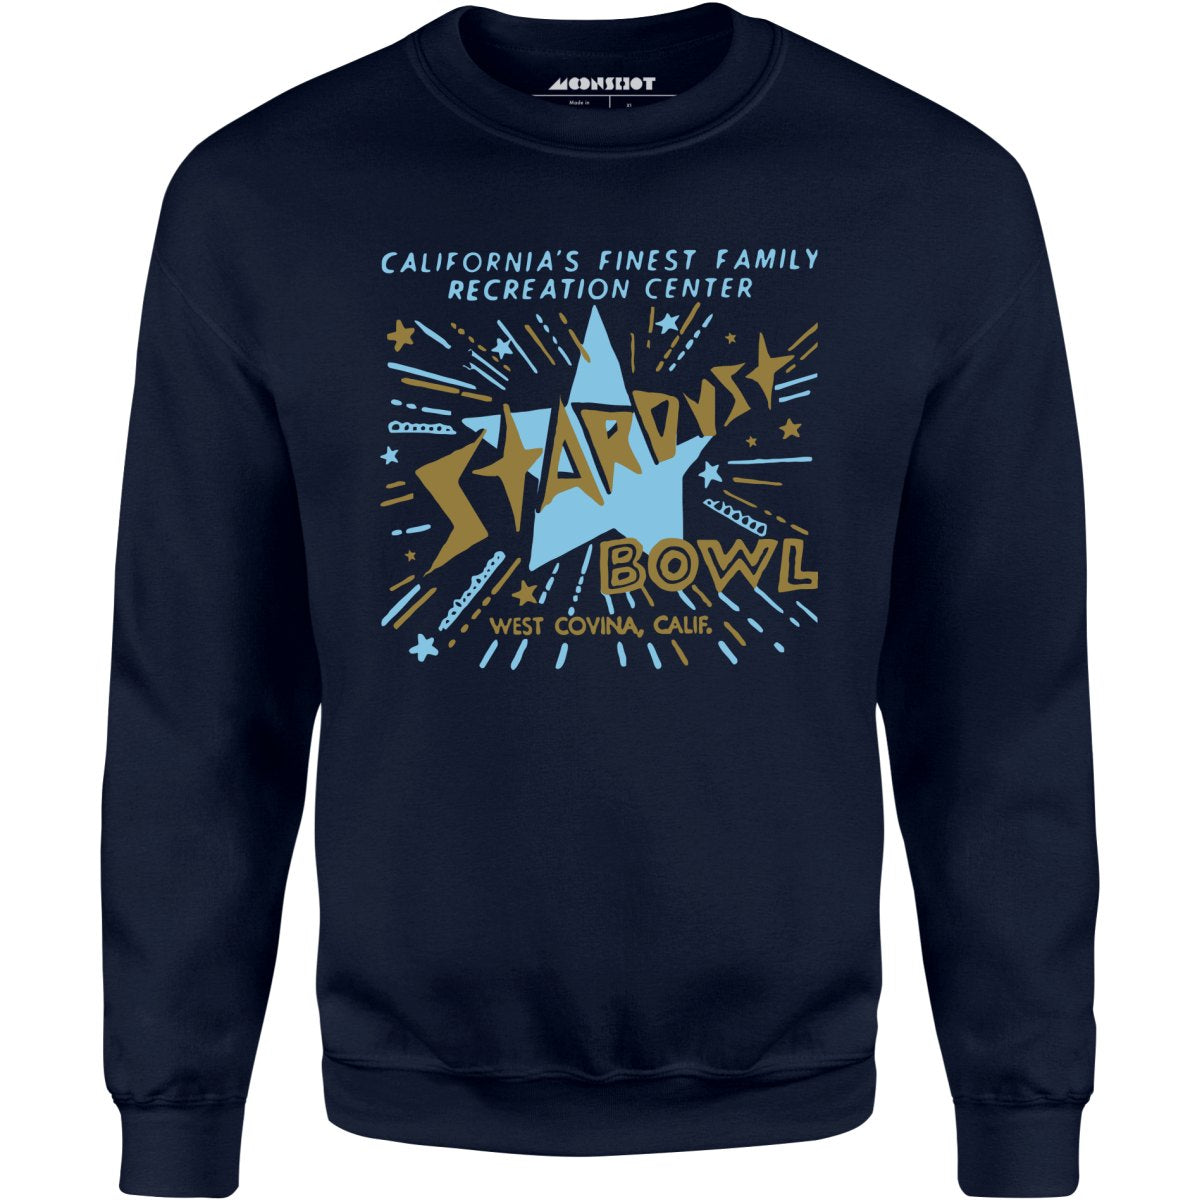 Stardust Bowl - West Covina, CA - Vintage Bowling Alley - Unisex Sweatshirt